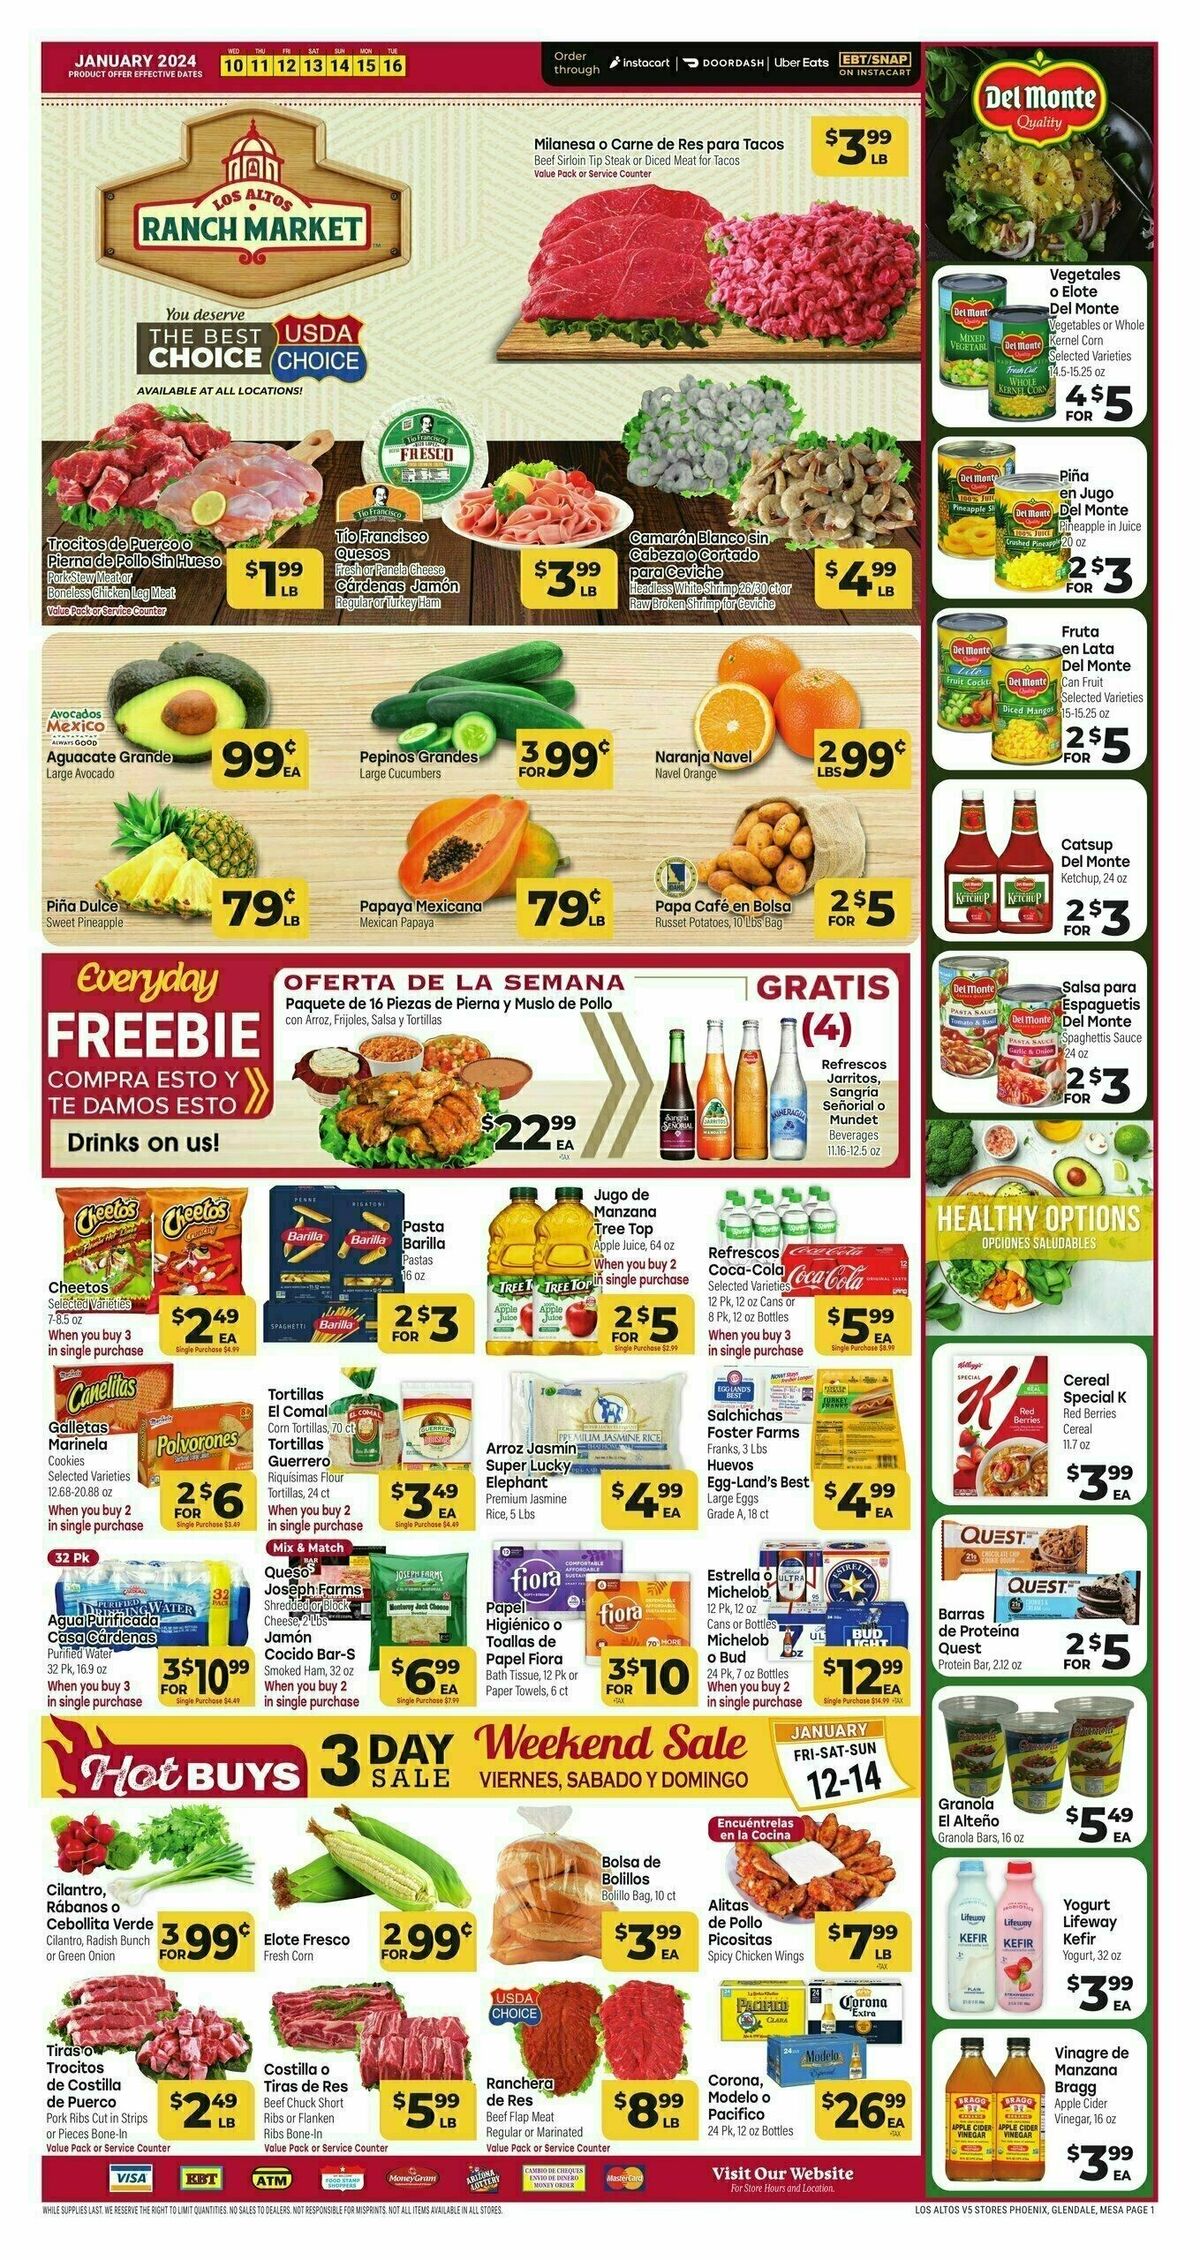 Cardenas Market Weekly Ad from January 10